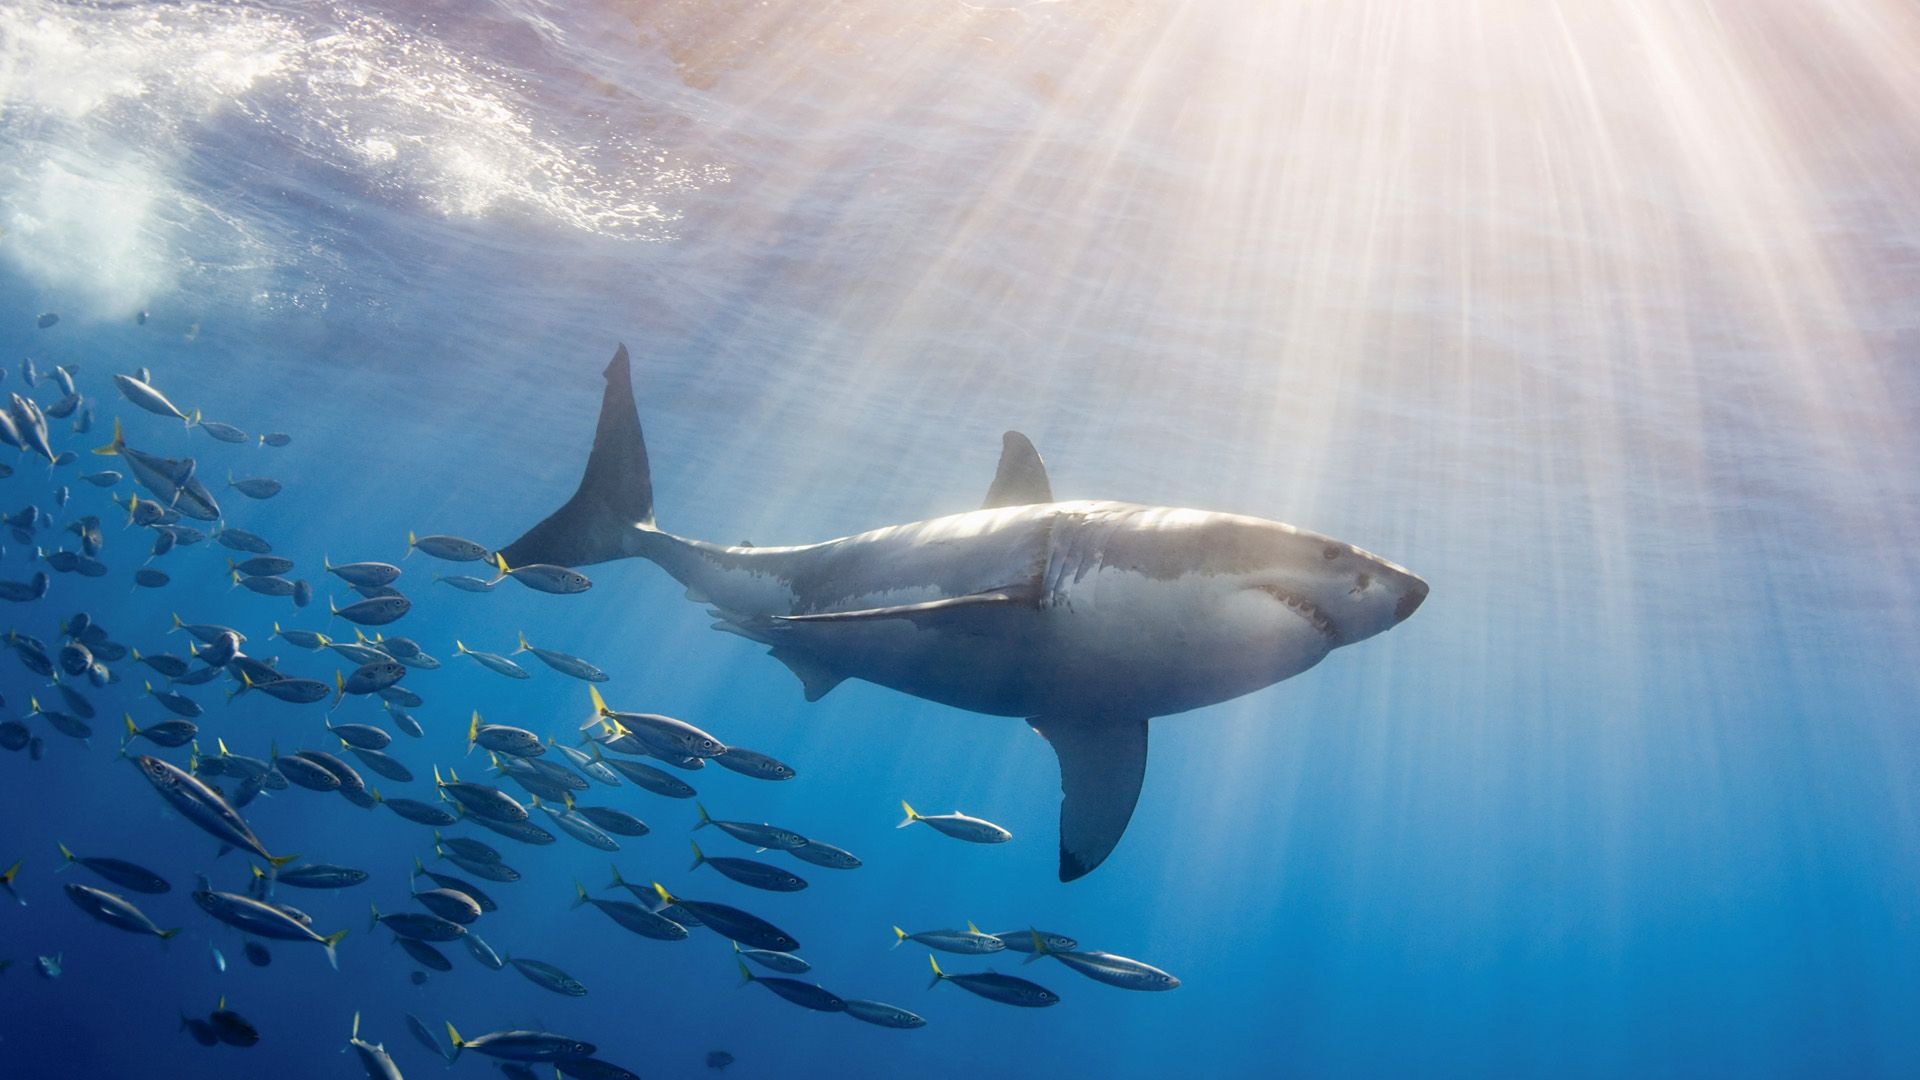 Big-Shark-Wallpaper-Sunlight-Image-Crowd-Picture.jpg